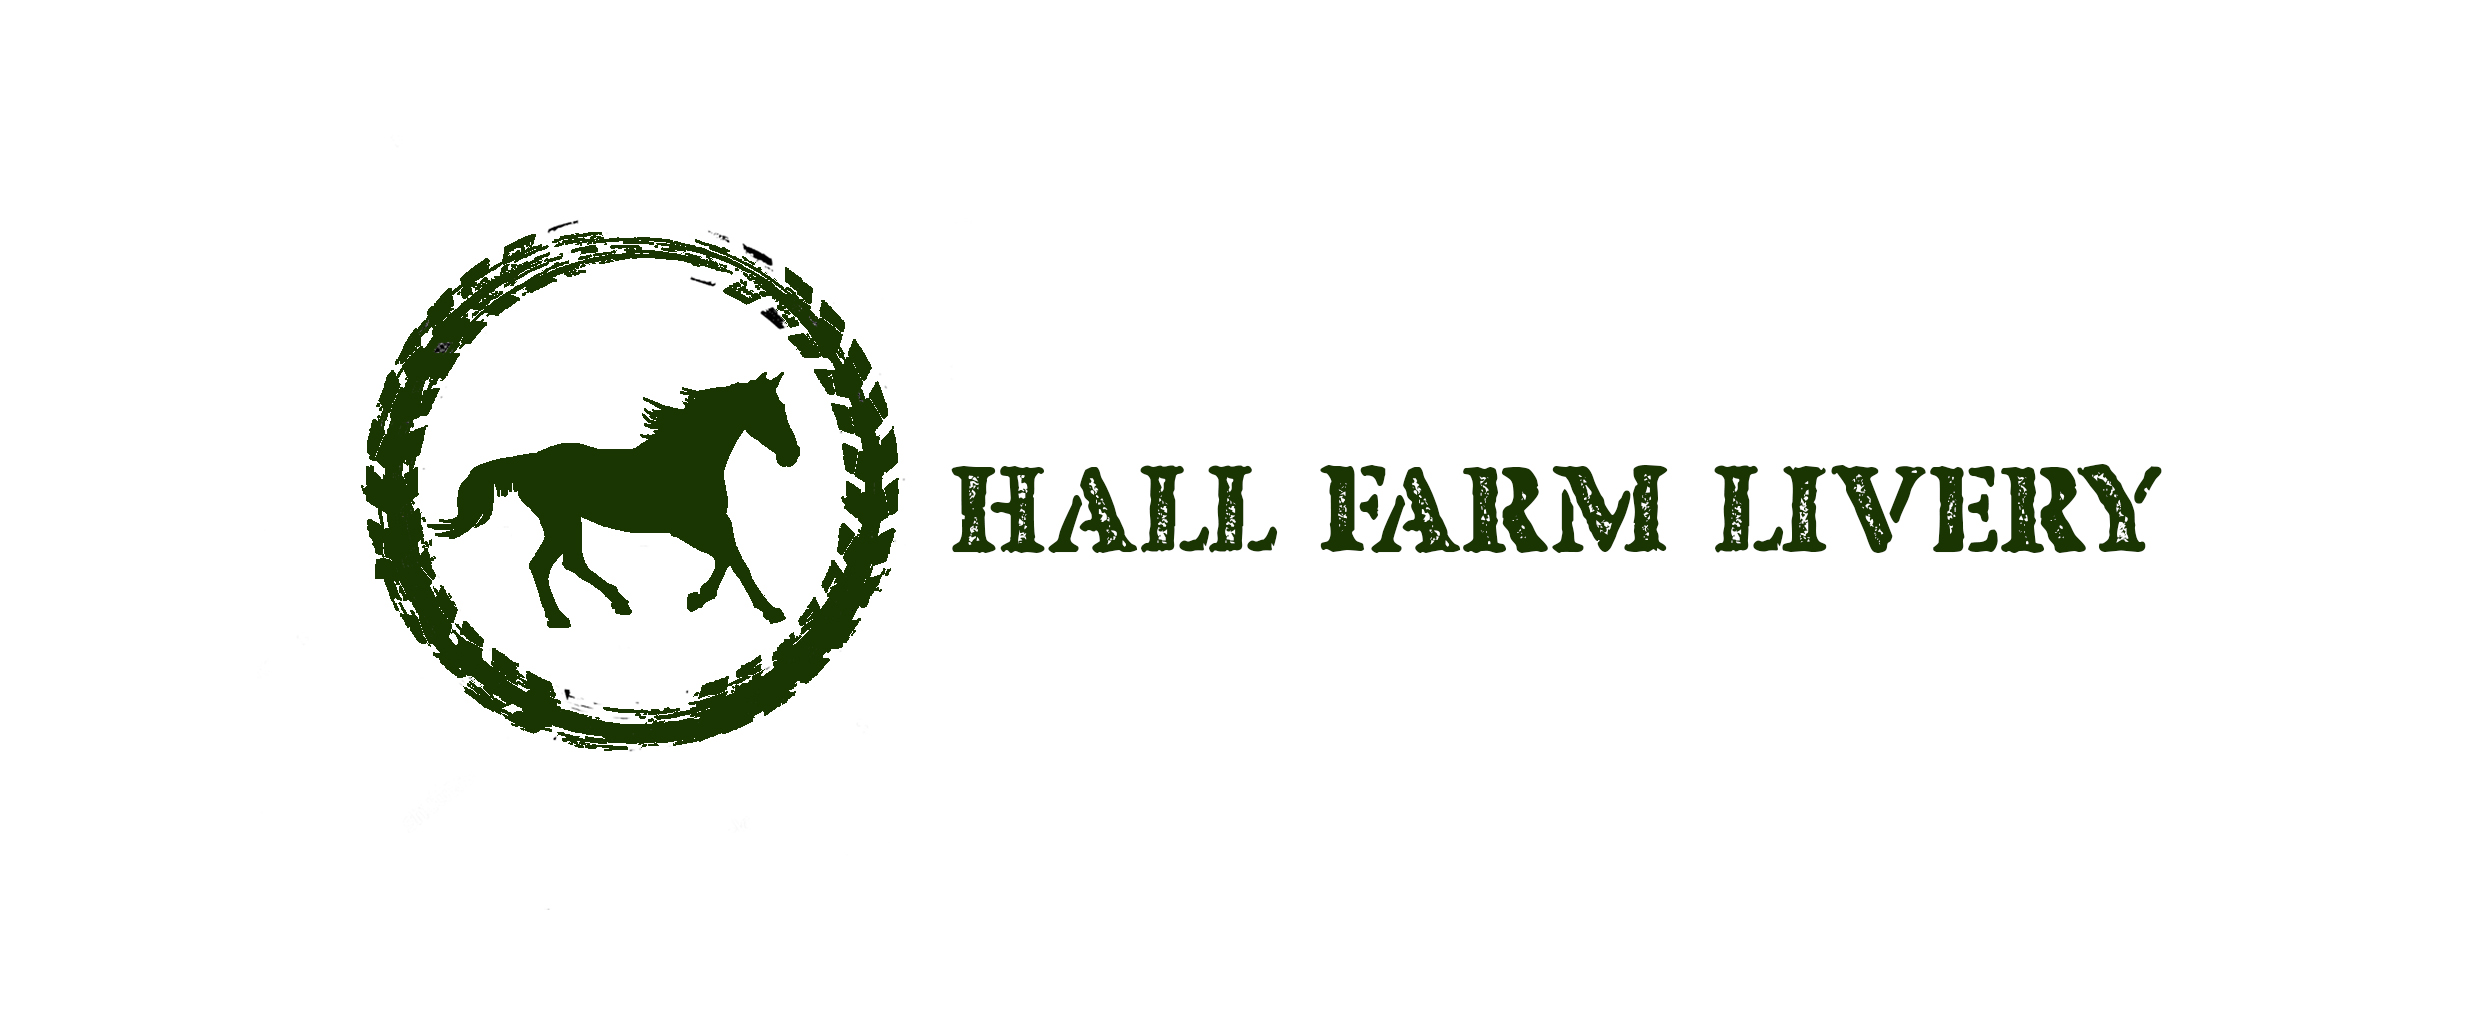 Hall Farm Livery